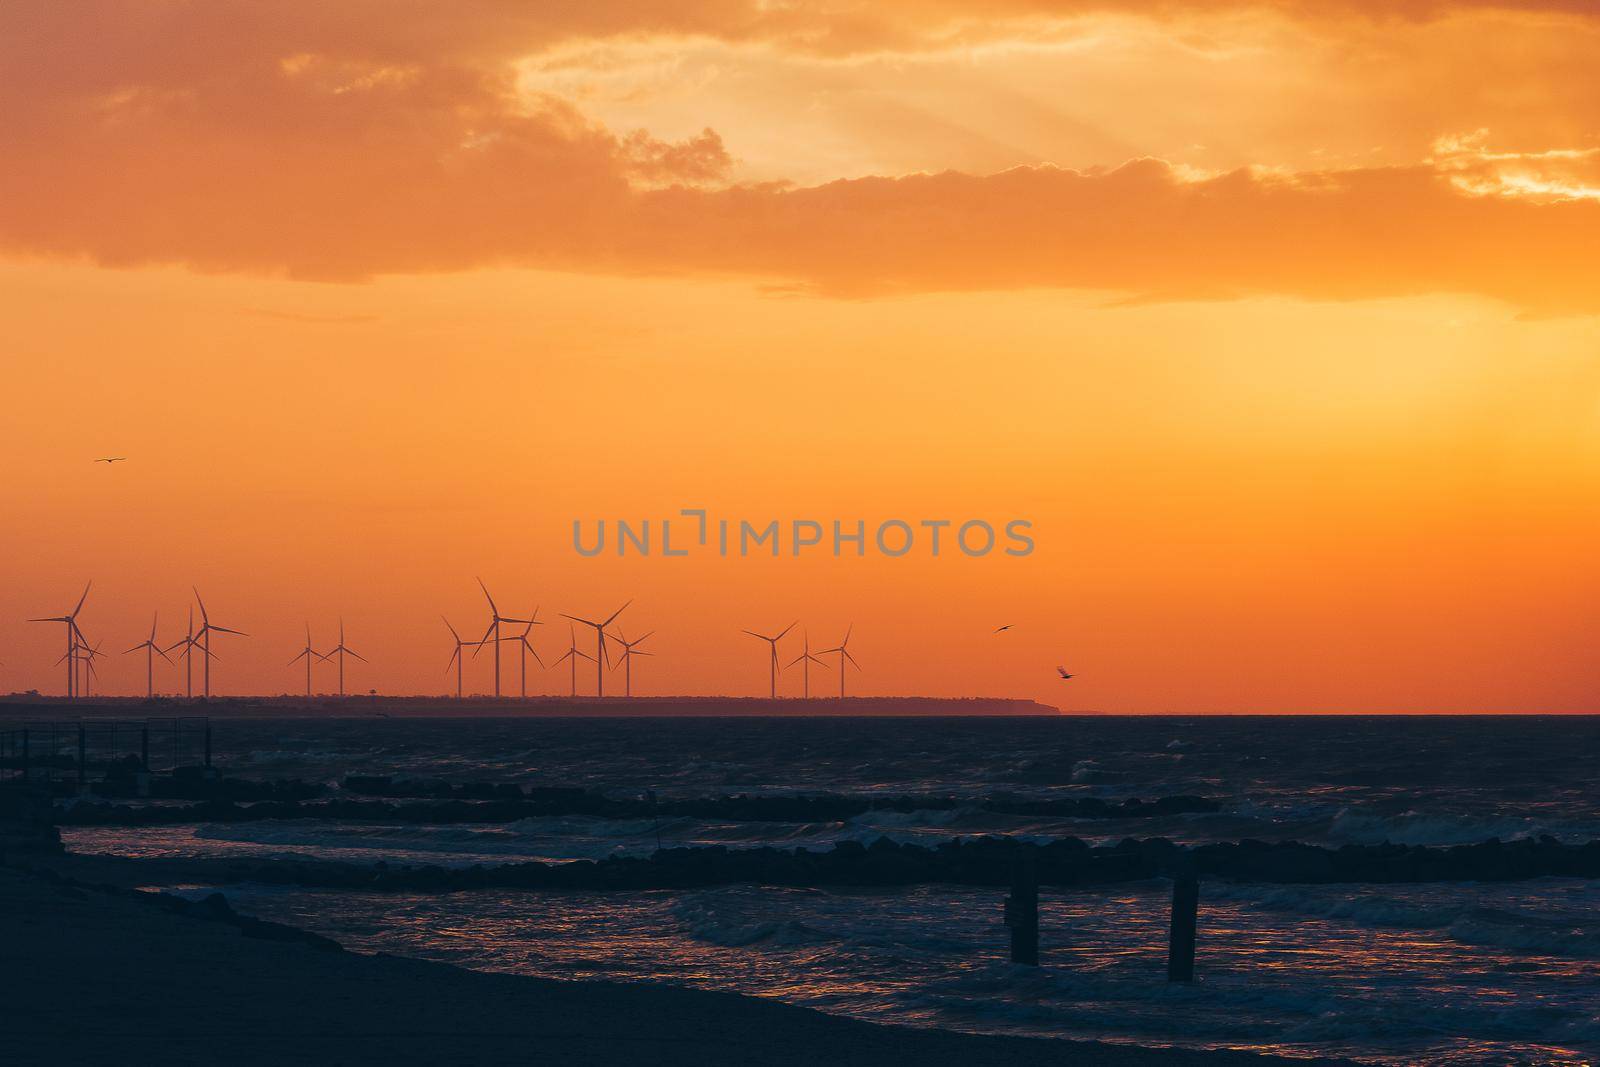 Wind turbine power generators silhouettes at ocean coastline at sunset. Alternative renewable energy production